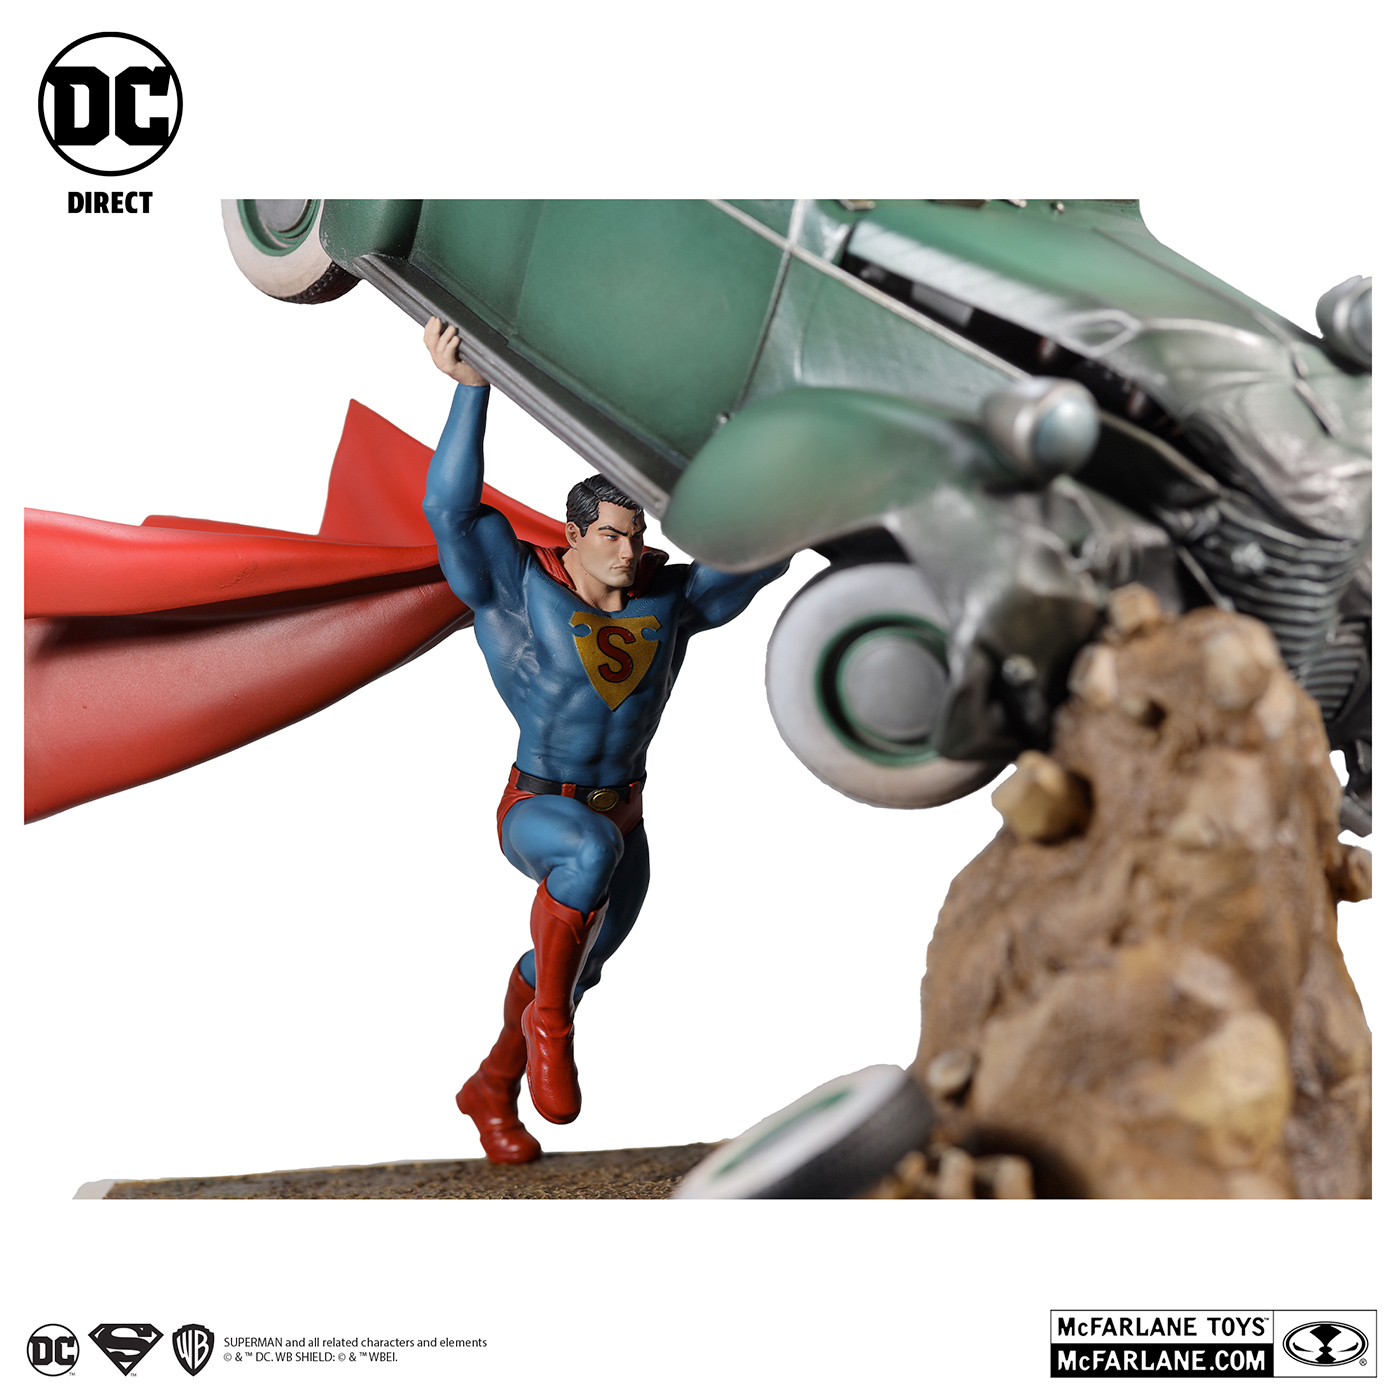 Superman Statue Cover of Action Comics Magazine #1